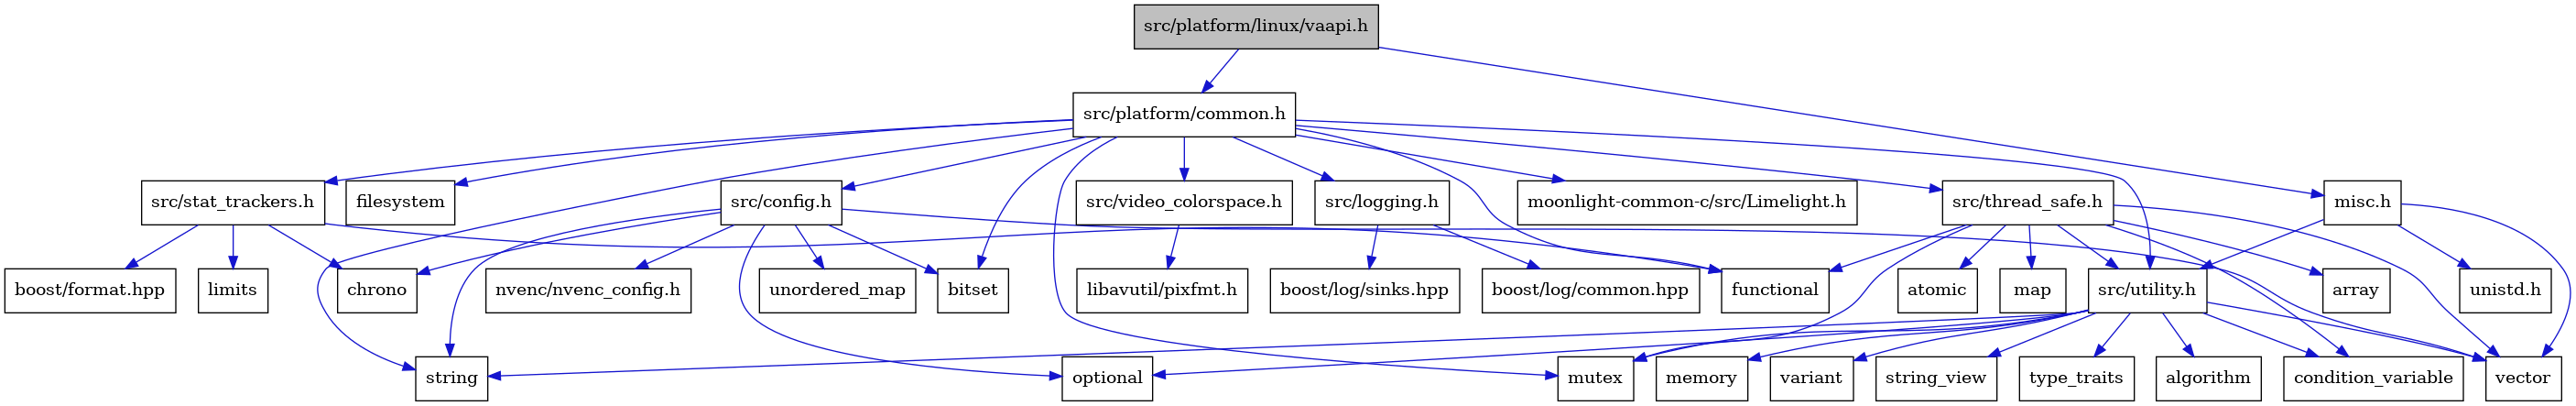 digraph {
    graph [bgcolor="#00000000"]
    node [shape=rectangle style=filled fillcolor="#FFFFFF" font=Helvetica padding=2]
    edge [color="#1414CE"]
    "31" [label="atomic" tooltip="atomic"]
    "26" [label="src/stat_trackers.h" tooltip="src/stat_trackers.h"]
    "18" [label="functional" tooltip="functional"]
    "27" [label="limits" tooltip="limits"]
    "25" [label="boost/log/sinks.hpp" tooltip="boost/log/sinks.hpp"]
    "17" [label="filesystem" tooltip="filesystem"]
    "14" [label="variant" tooltip="variant"]
    "28" [label="boost/format.hpp" tooltip="boost/format.hpp"]
    "11" [label="string" tooltip="string"]
    "32" [label="map" tooltip="map"]
    "5" [label="src/utility.h" tooltip="src/utility.h"]
    "19" [label="src/config.h" tooltip="src/config.h"]
    "15" [label="src/platform/common.h" tooltip="src/platform/common.h"]
    "12" [label="string_view" tooltip="string_view"]
    "7" [label="condition_variable" tooltip="condition_variable"]
    "33" [label="src/video_colorspace.h" tooltip="src/video_colorspace.h"]
    "22" [label="nvenc/nvenc_config.h" tooltip="nvenc/nvenc_config.h"]
    "16" [label="bitset" tooltip="bitset"]
    "34" [label="libavutil/pixfmt.h" tooltip="libavutil/pixfmt.h"]
    "1" [label="src/platform/linux/vaapi.h" tooltip="src/platform/linux/vaapi.h" fillcolor="#BFBFBF"]
    "10" [label="optional" tooltip="optional"]
    "3" [label="unistd.h" tooltip="unistd.h"]
    "4" [label="vector" tooltip="vector"]
    "30" [label="array" tooltip="array"]
    "23" [label="src/logging.h" tooltip="src/logging.h"]
    "2" [label="misc.h" tooltip="misc.h"]
    "21" [label="unordered_map" tooltip="unordered_map"]
    "9" [label="mutex" tooltip="mutex"]
    "20" [label="chrono" tooltip="chrono"]
    "13" [label="type_traits" tooltip="type_traits"]
    "35" [label="moonlight-common-c/src/Limelight.h" tooltip="moonlight-common-c/src/Limelight.h"]
    "24" [label="boost/log/common.hpp" tooltip="boost/log/common.hpp"]
    "6" [label="algorithm" tooltip="algorithm"]
    "8" [label="memory" tooltip="memory"]
    "29" [label="src/thread_safe.h" tooltip="src/thread_safe.h"]
    "26" -> "20" [dir=forward tooltip="include"]
    "26" -> "18" [dir=forward tooltip="include"]
    "26" -> "27" [dir=forward tooltip="include"]
    "26" -> "28" [dir=forward tooltip="include"]
    "5" -> "6" [dir=forward tooltip="include"]
    "5" -> "7" [dir=forward tooltip="include"]
    "5" -> "8" [dir=forward tooltip="include"]
    "5" -> "9" [dir=forward tooltip="include"]
    "5" -> "10" [dir=forward tooltip="include"]
    "5" -> "11" [dir=forward tooltip="include"]
    "5" -> "12" [dir=forward tooltip="include"]
    "5" -> "13" [dir=forward tooltip="include"]
    "5" -> "14" [dir=forward tooltip="include"]
    "5" -> "4" [dir=forward tooltip="include"]
    "19" -> "16" [dir=forward tooltip="include"]
    "19" -> "20" [dir=forward tooltip="include"]
    "19" -> "10" [dir=forward tooltip="include"]
    "19" -> "11" [dir=forward tooltip="include"]
    "19" -> "21" [dir=forward tooltip="include"]
    "19" -> "4" [dir=forward tooltip="include"]
    "19" -> "22" [dir=forward tooltip="include"]
    "15" -> "16" [dir=forward tooltip="include"]
    "15" -> "17" [dir=forward tooltip="include"]
    "15" -> "18" [dir=forward tooltip="include"]
    "15" -> "9" [dir=forward tooltip="include"]
    "15" -> "11" [dir=forward tooltip="include"]
    "15" -> "19" [dir=forward tooltip="include"]
    "15" -> "23" [dir=forward tooltip="include"]
    "15" -> "26" [dir=forward tooltip="include"]
    "15" -> "29" [dir=forward tooltip="include"]
    "15" -> "5" [dir=forward tooltip="include"]
    "15" -> "33" [dir=forward tooltip="include"]
    "15" -> "35" [dir=forward tooltip="include"]
    "33" -> "34" [dir=forward tooltip="include"]
    "1" -> "2" [dir=forward tooltip="include"]
    "1" -> "15" [dir=forward tooltip="include"]
    "23" -> "24" [dir=forward tooltip="include"]
    "23" -> "25" [dir=forward tooltip="include"]
    "2" -> "3" [dir=forward tooltip="include"]
    "2" -> "4" [dir=forward tooltip="include"]
    "2" -> "5" [dir=forward tooltip="include"]
    "29" -> "30" [dir=forward tooltip="include"]
    "29" -> "31" [dir=forward tooltip="include"]
    "29" -> "7" [dir=forward tooltip="include"]
    "29" -> "18" [dir=forward tooltip="include"]
    "29" -> "32" [dir=forward tooltip="include"]
    "29" -> "9" [dir=forward tooltip="include"]
    "29" -> "4" [dir=forward tooltip="include"]
    "29" -> "5" [dir=forward tooltip="include"]
}